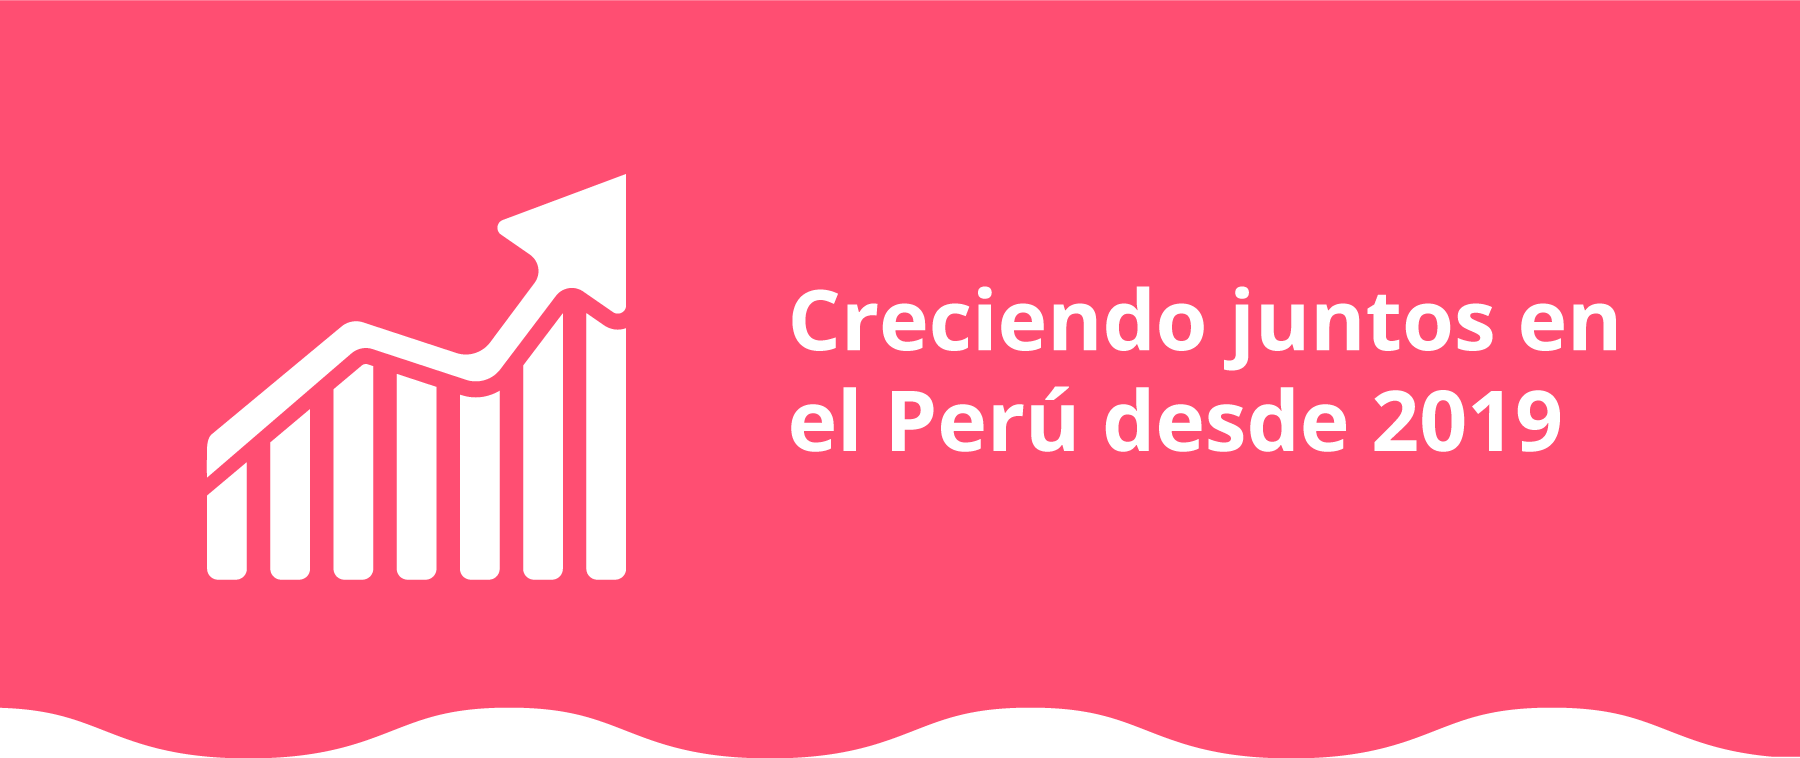 onlinecasino-perú